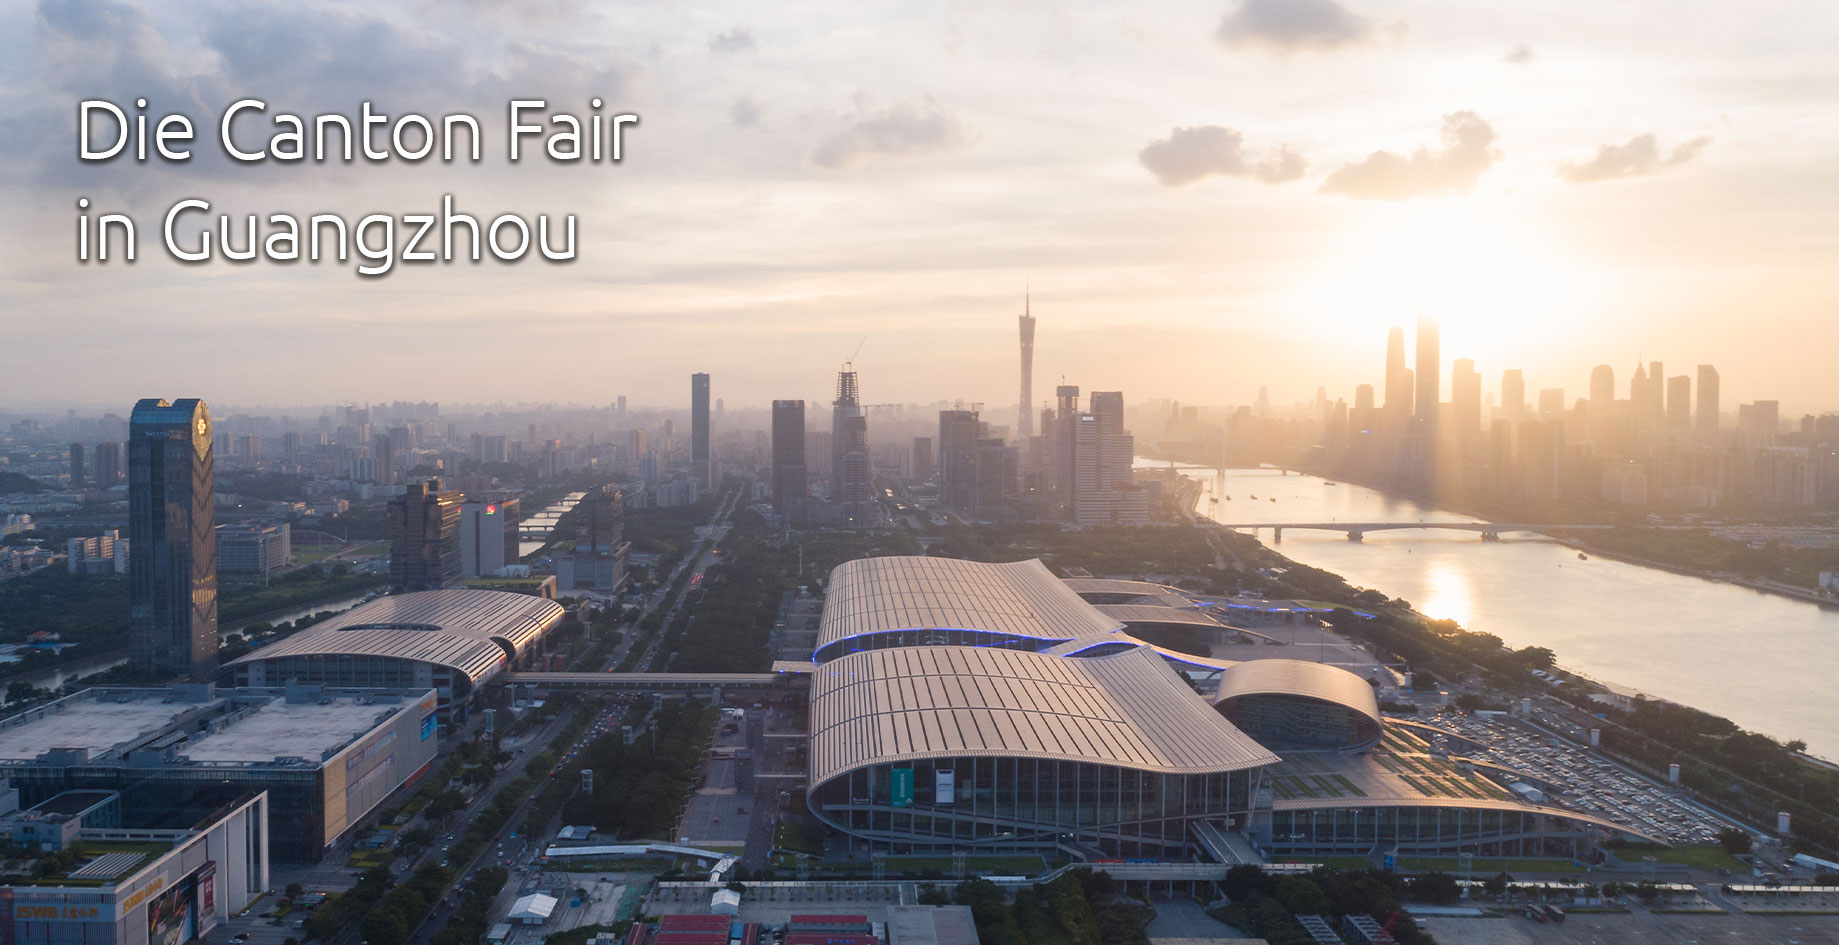 Die Canton Fair in Guangzhou